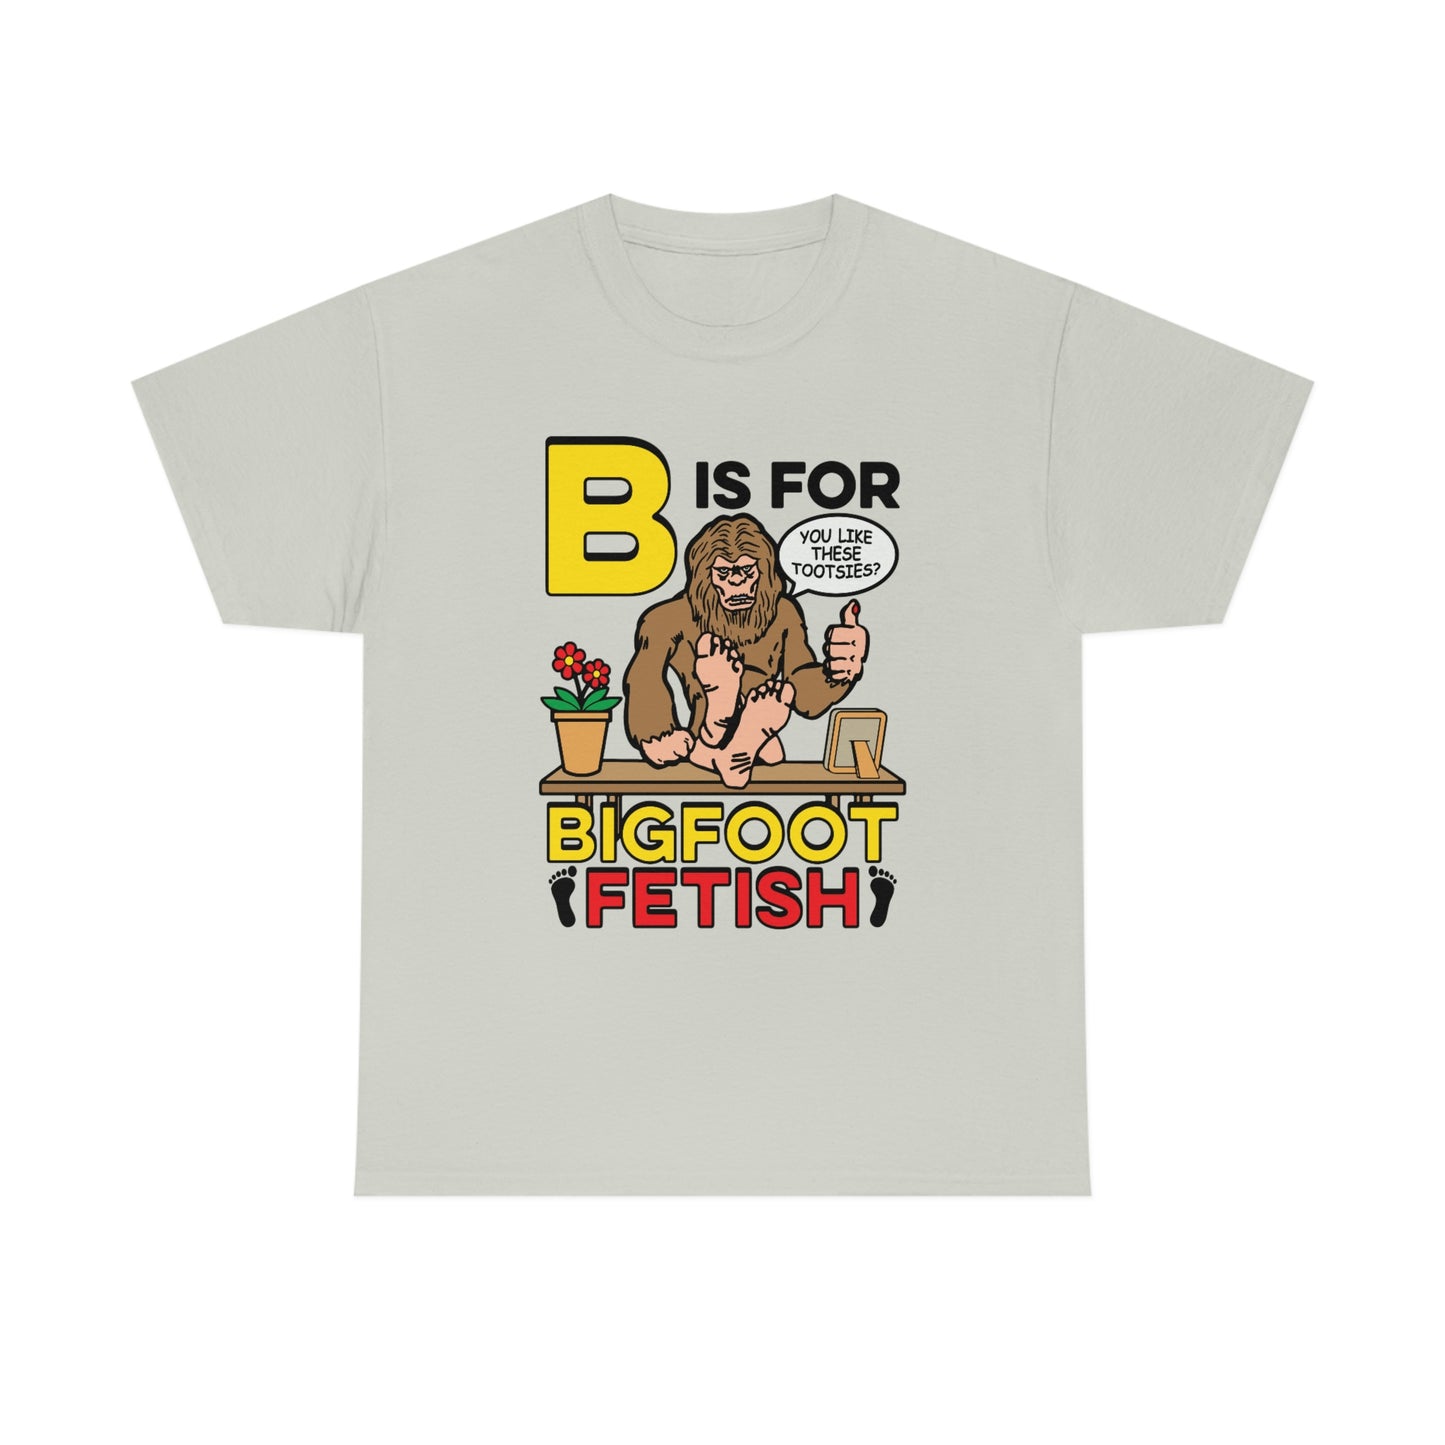 B Is For Bigfoot (Fetish).